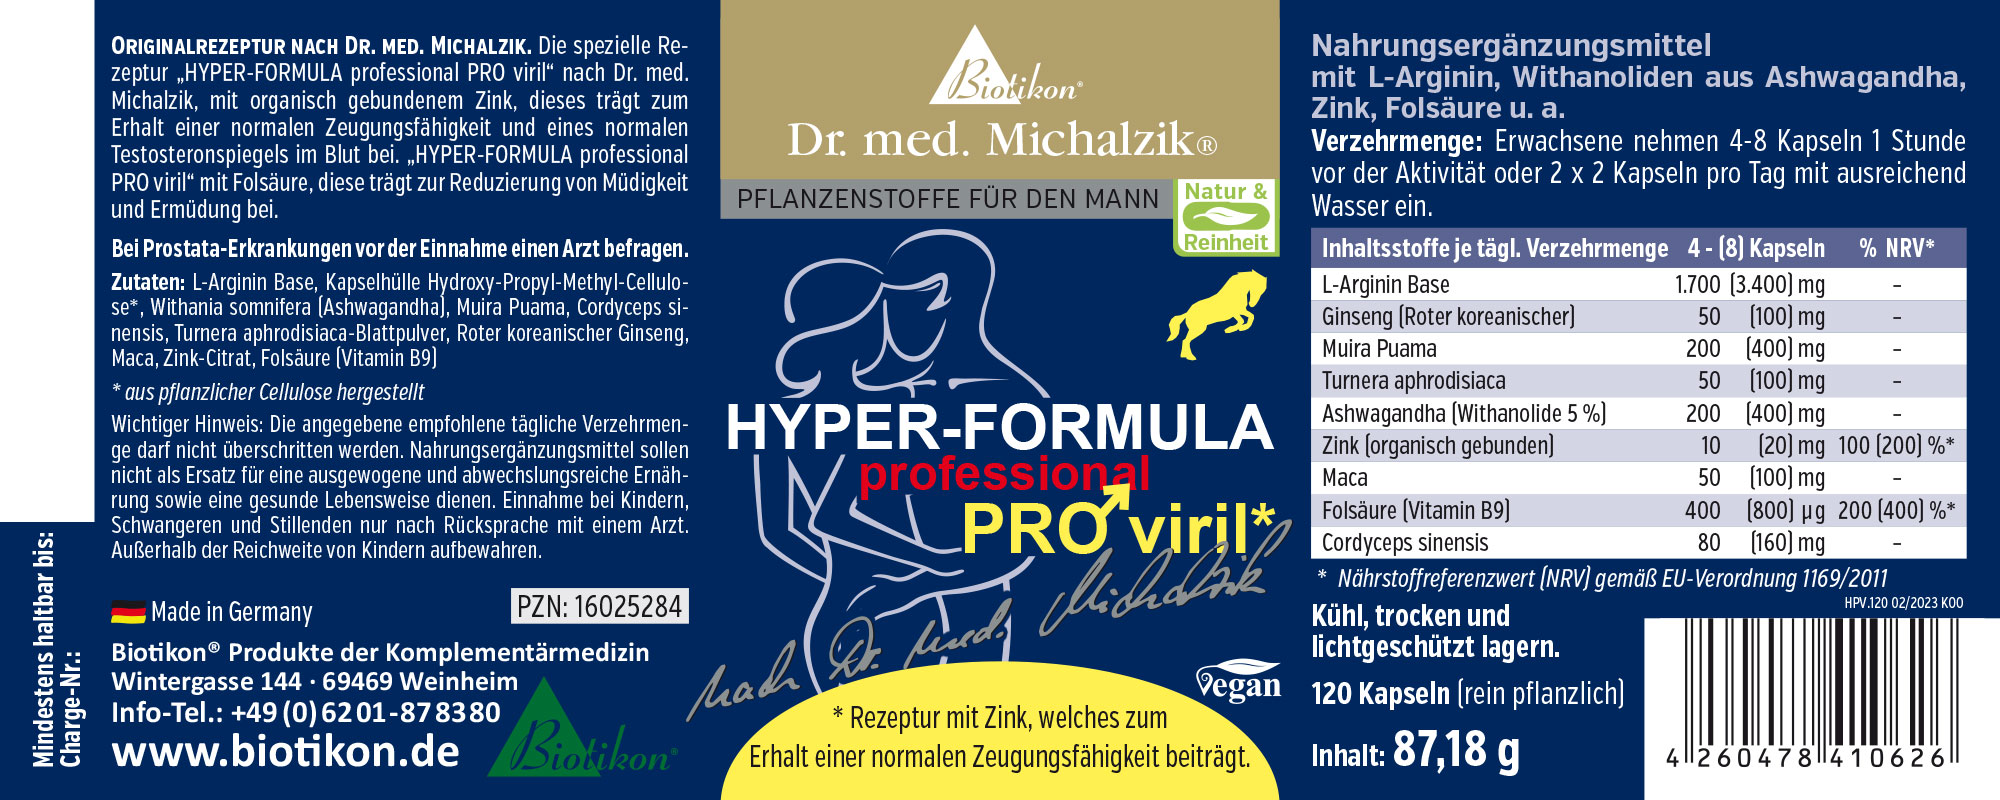 Hyper PRO viril stamina di Dr. med. Michalzik, Set di 2